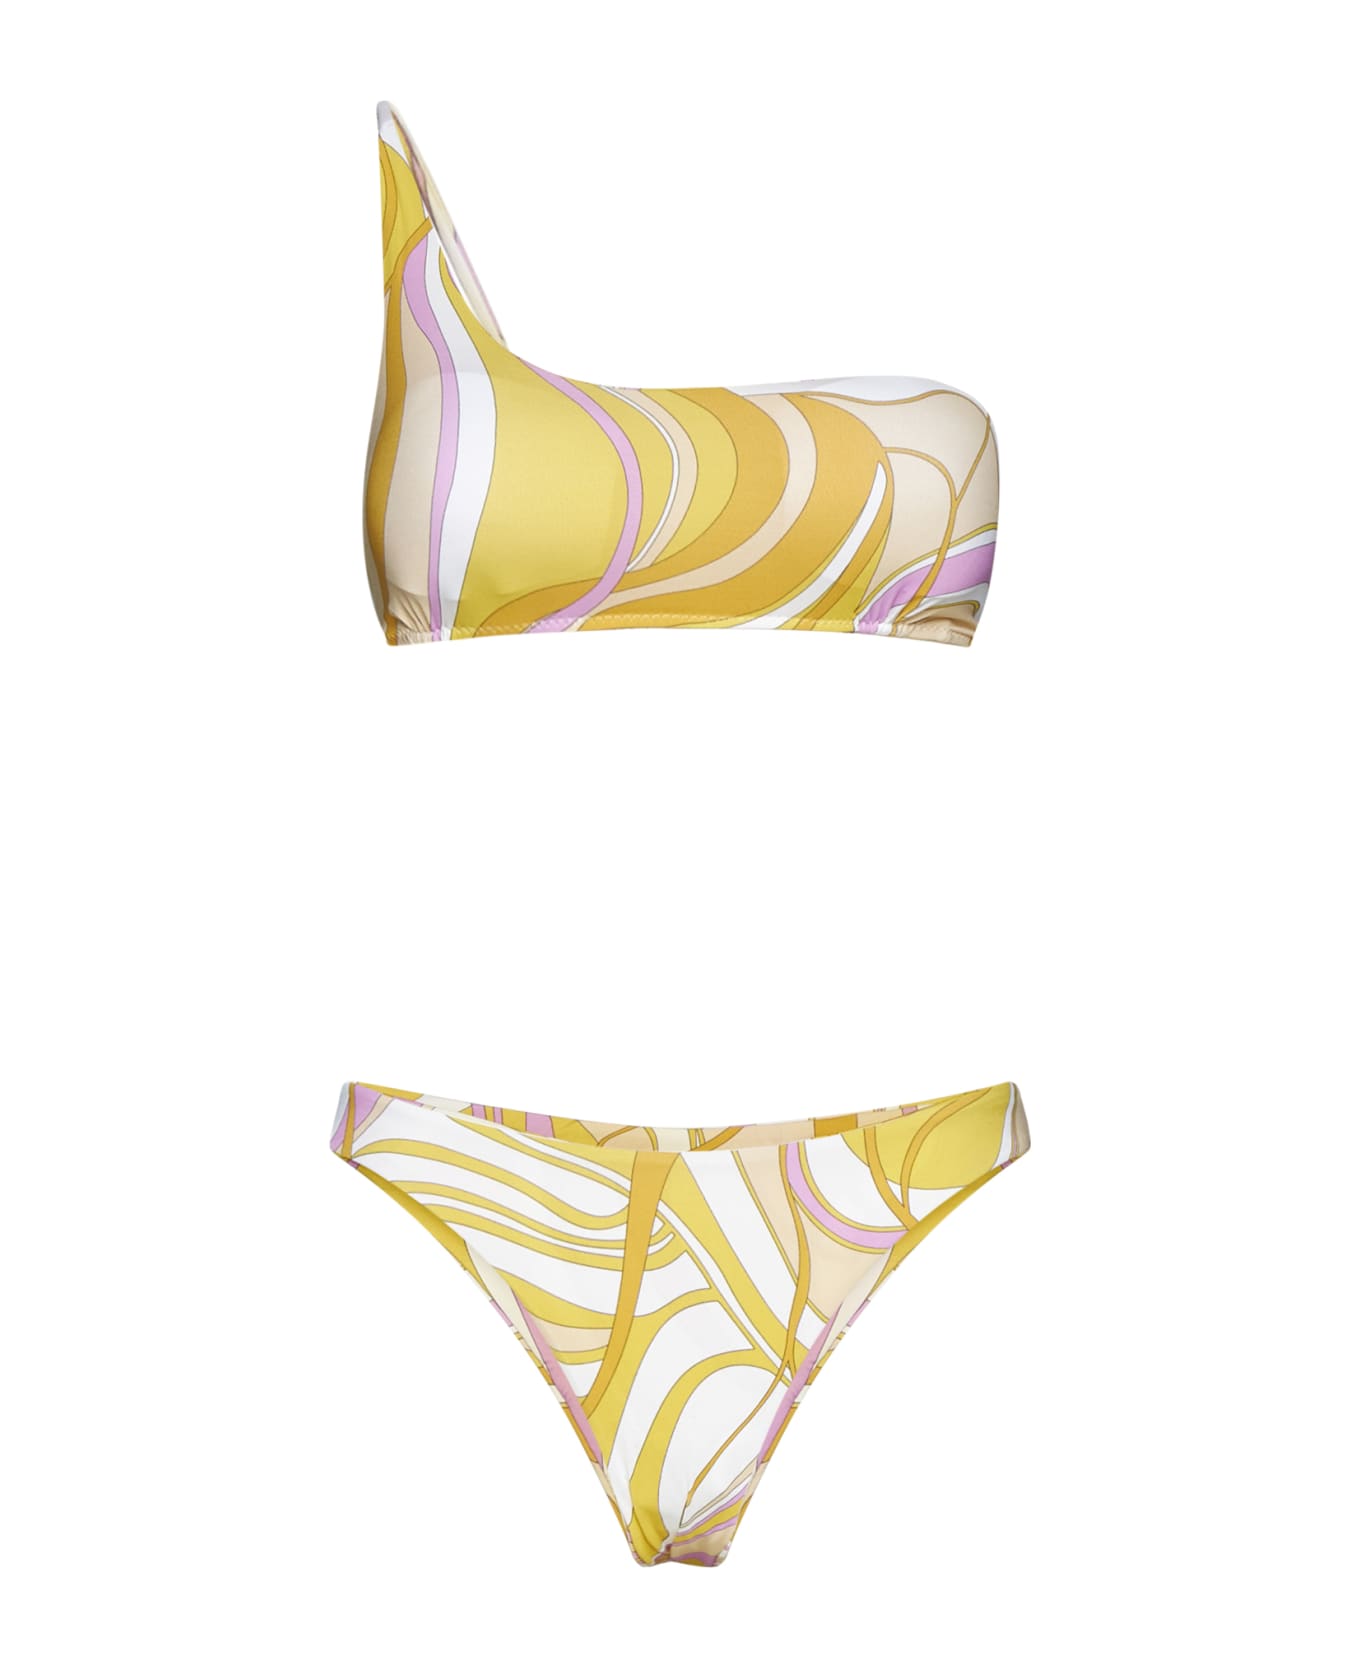 Bikini Lovers Swimwear - Rosa